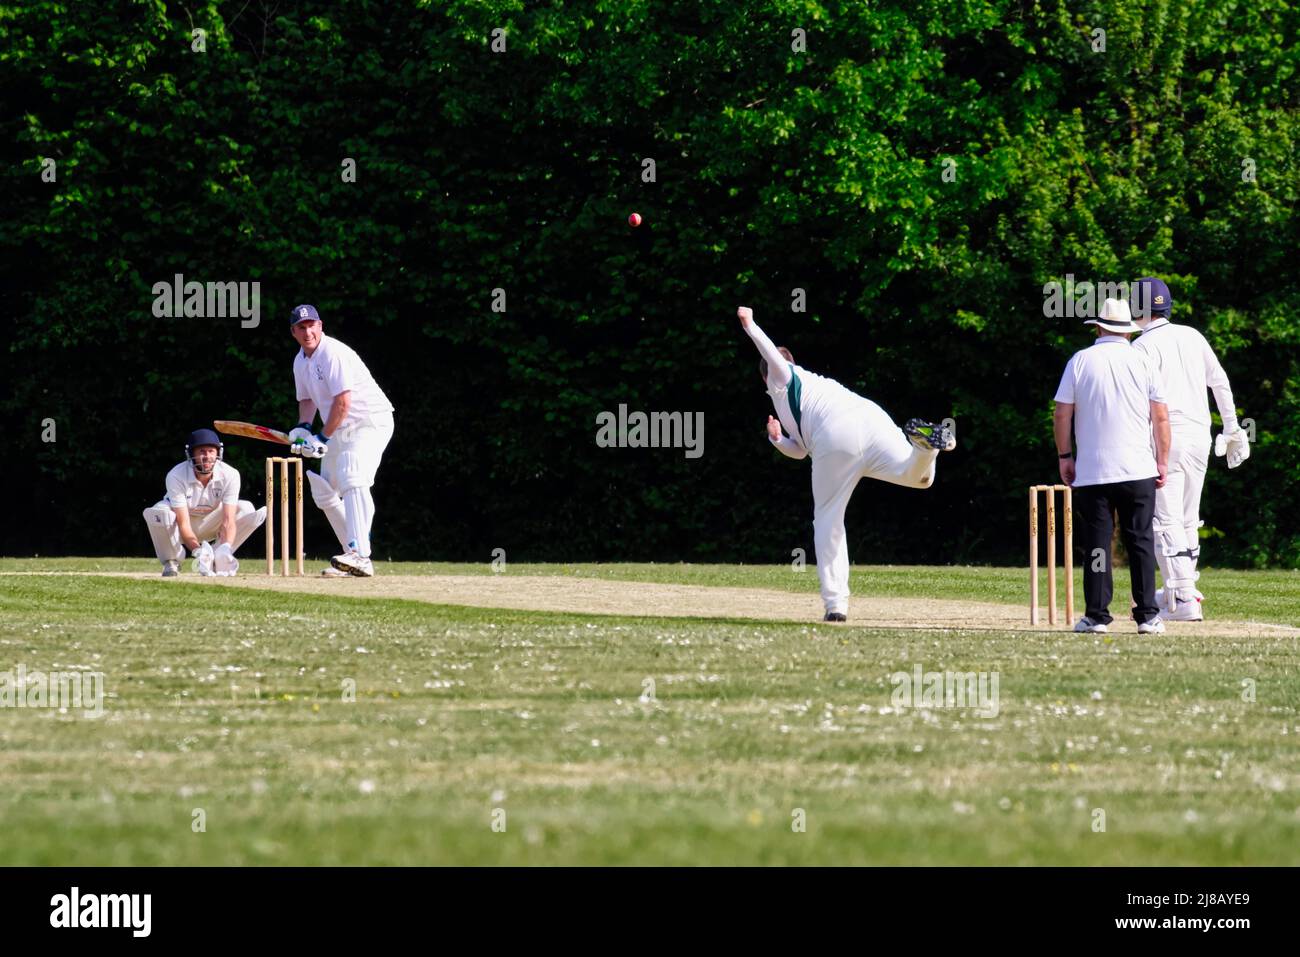 Village cricket in Hampshire, England Stock Photo